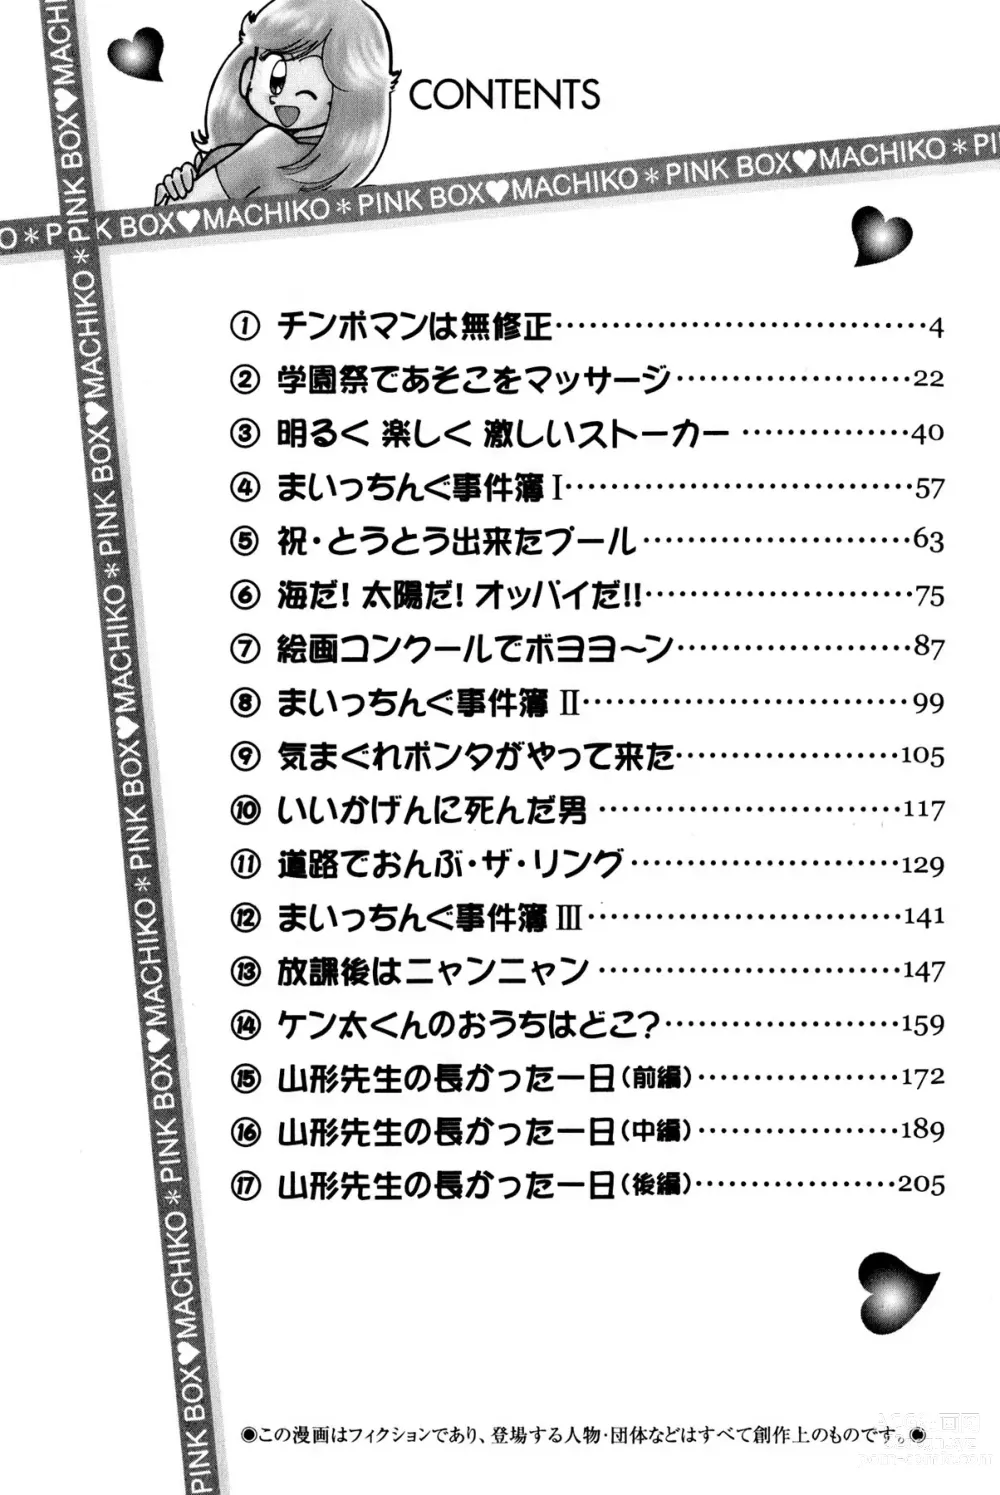 Page 6 of manga Maichiingu Machiko Sensei book pink